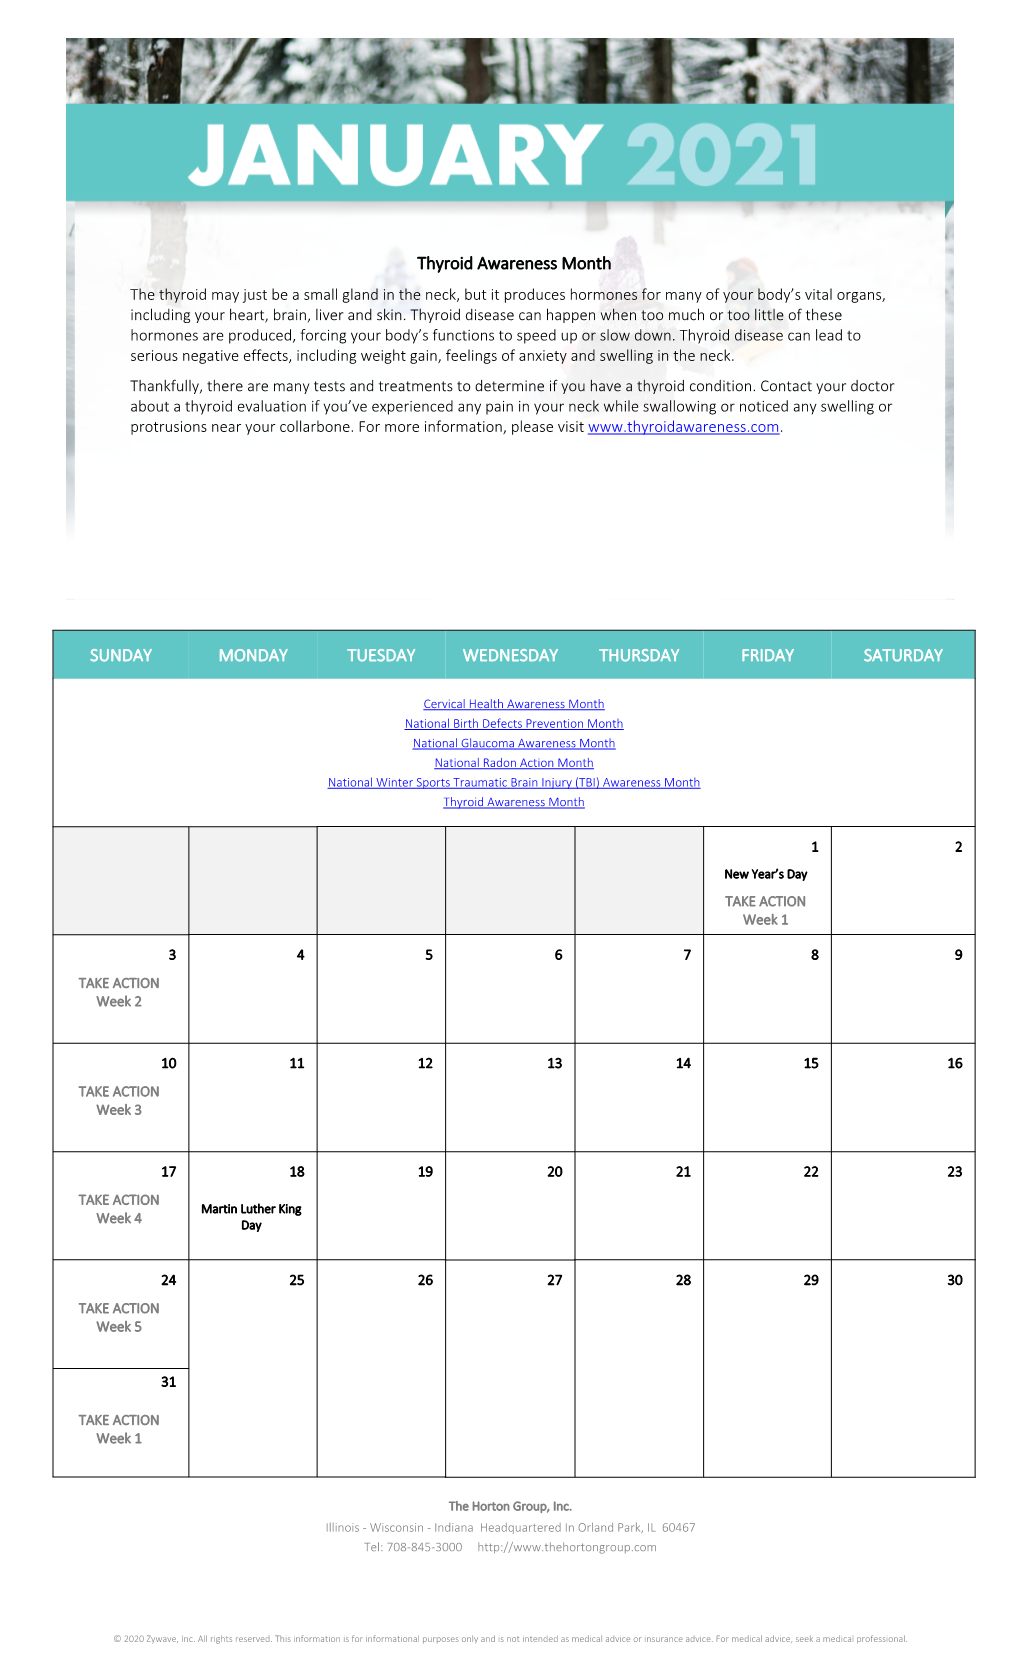 National Health Observances Calendar 2021